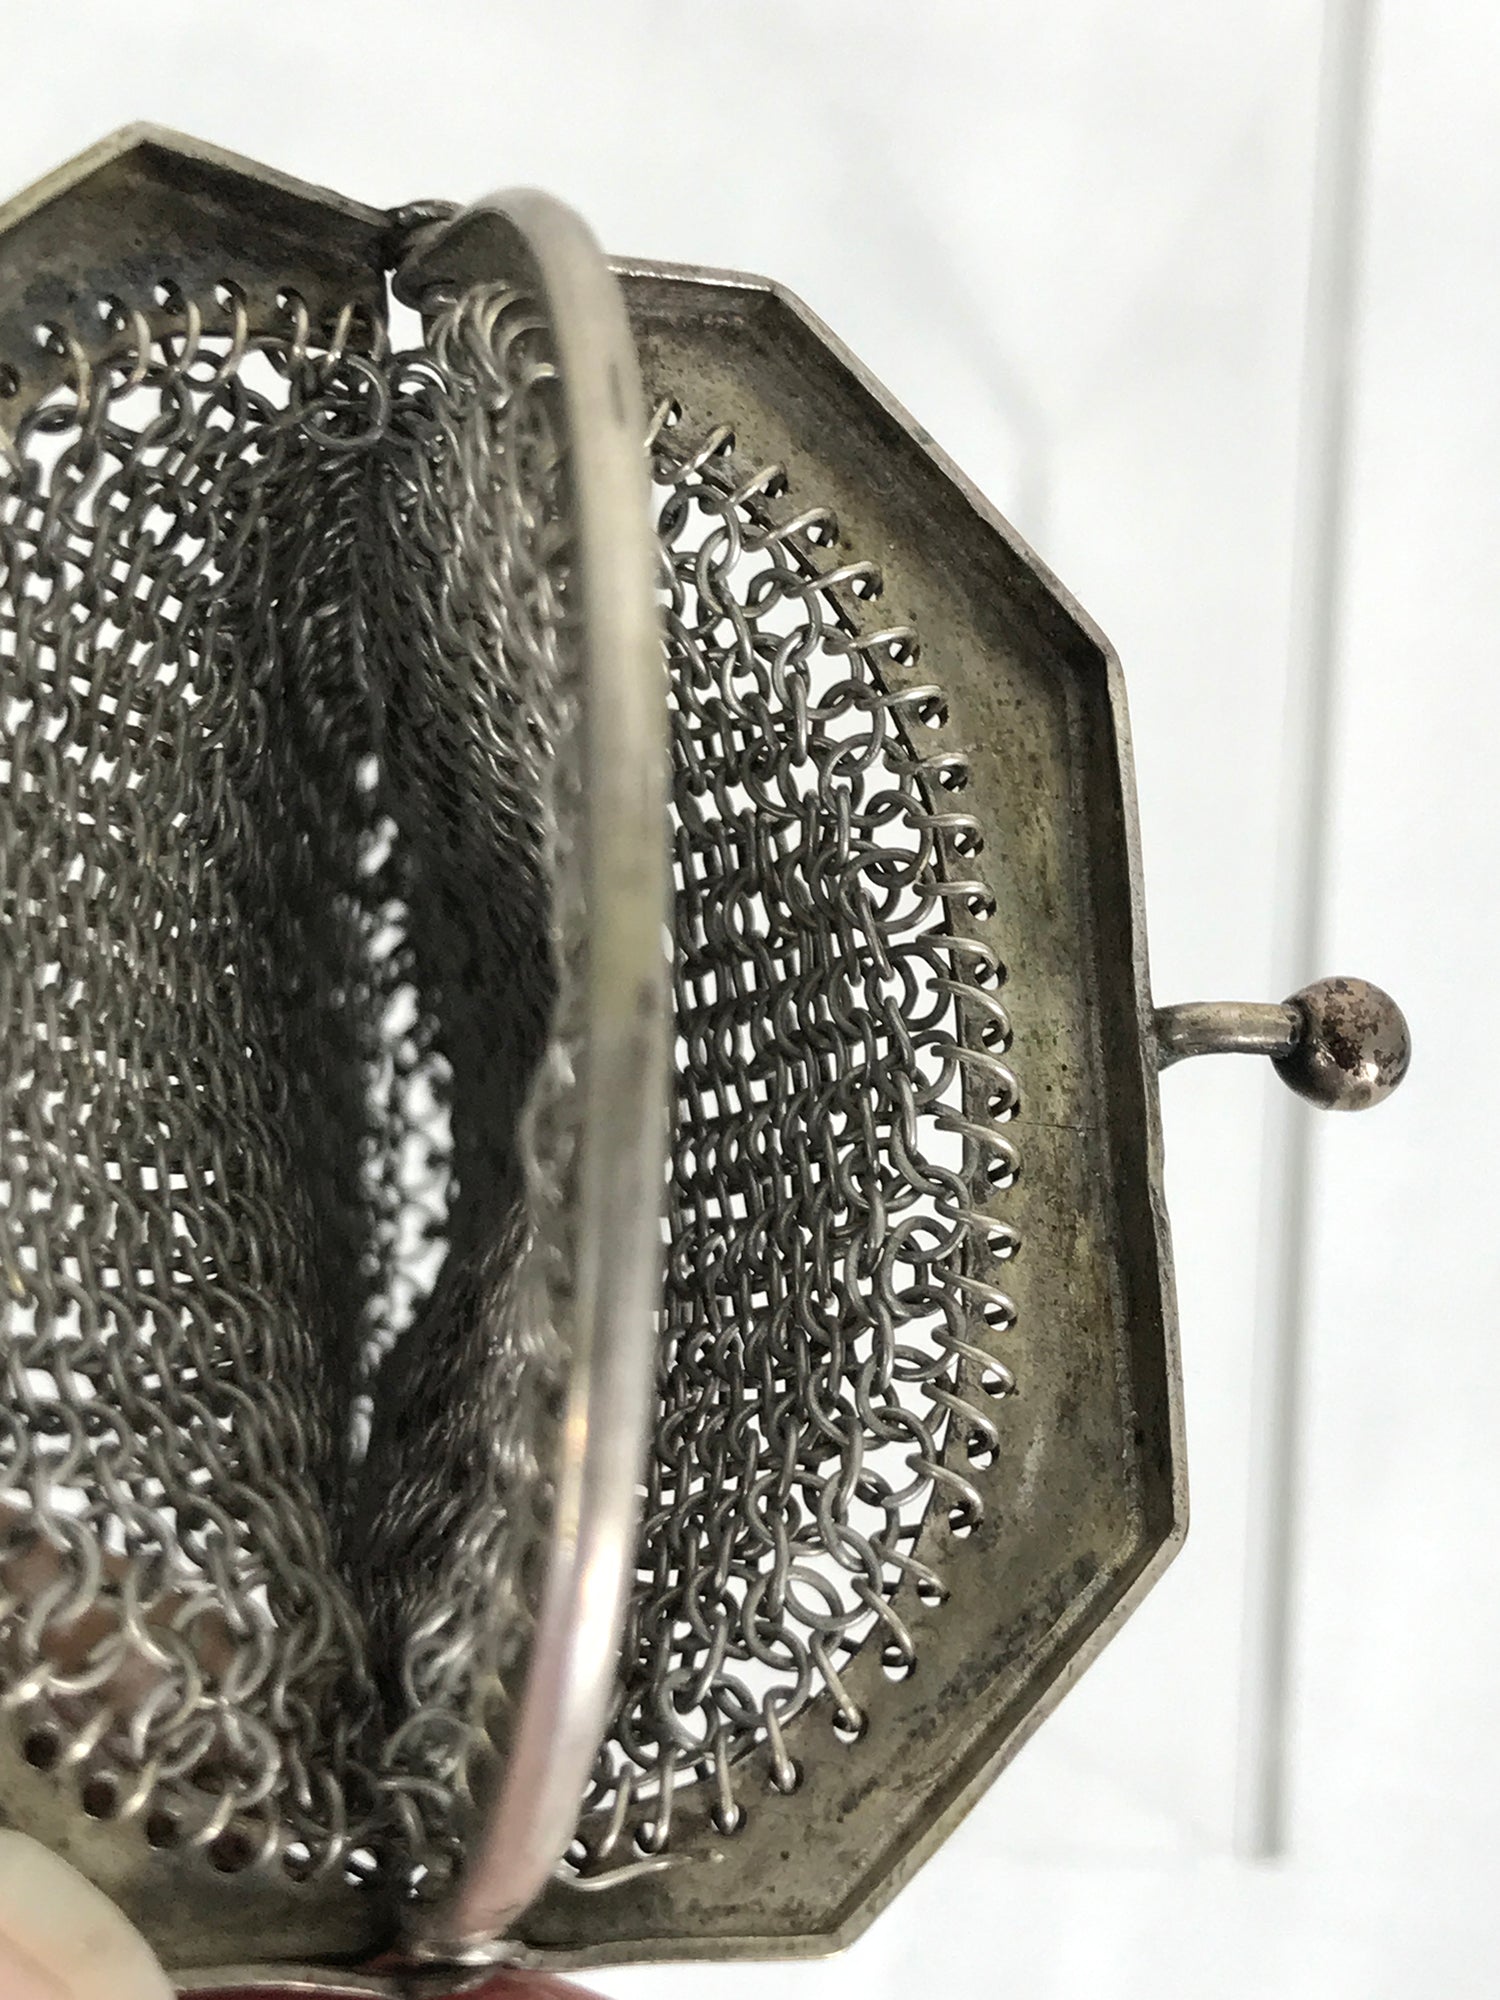 Antique Silver Mesh Purse with Fringe! | Beadparadise.com